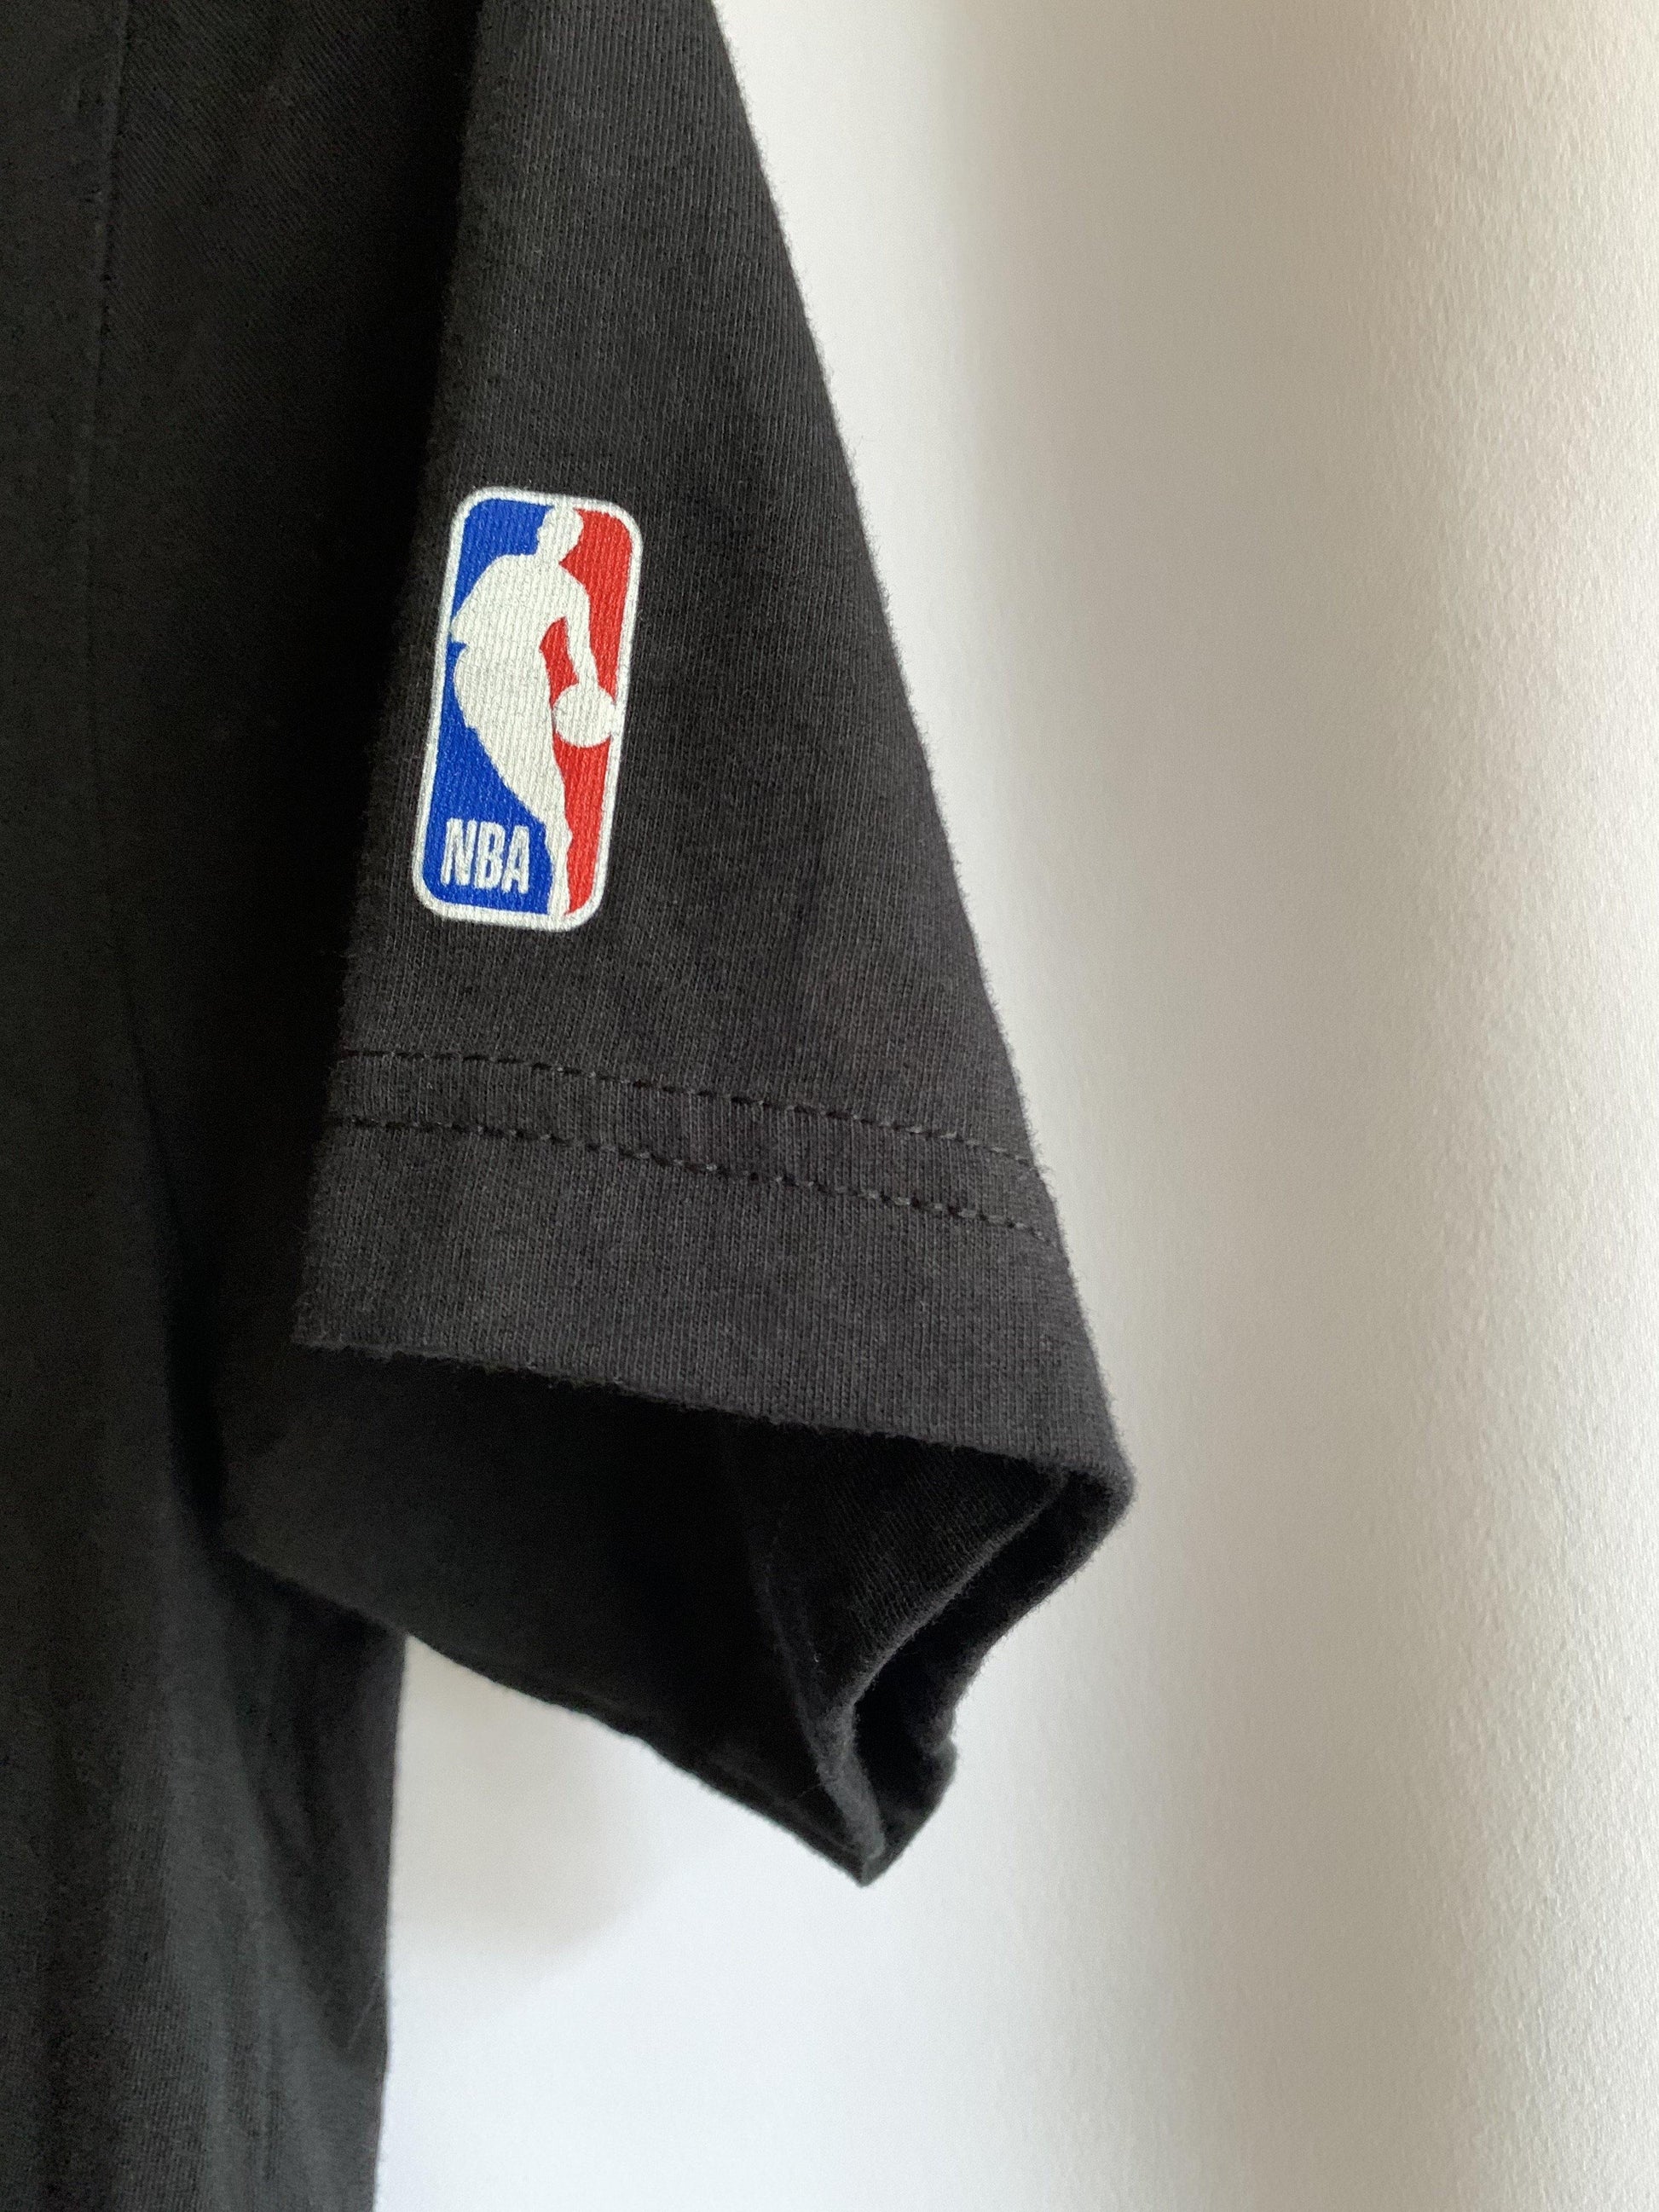 Jack Daniel’s NBA T-Shirt - The Feel